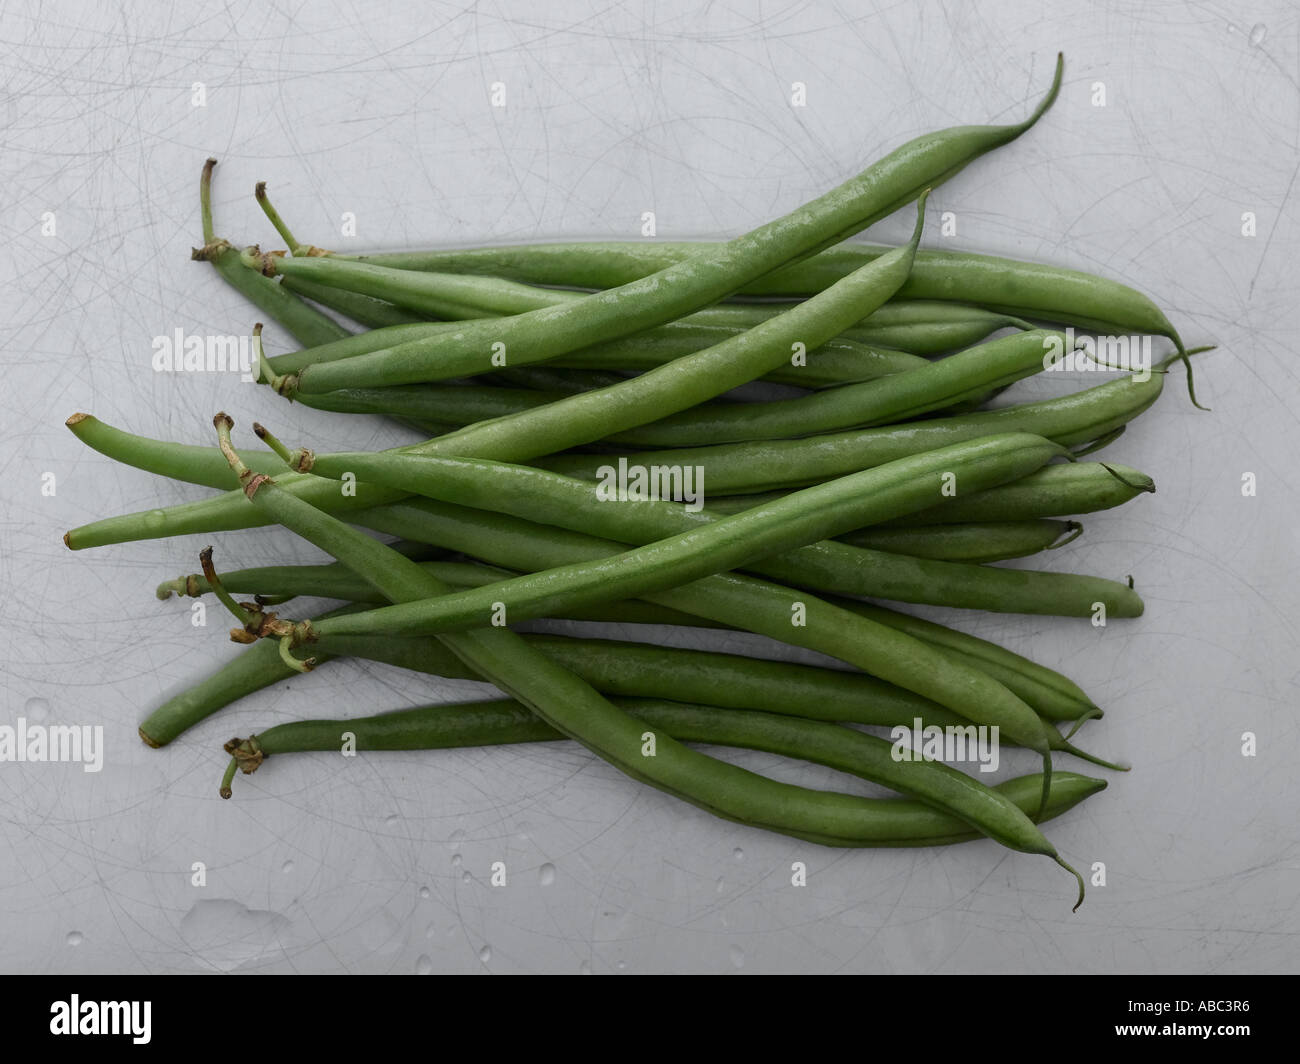 Green beans on metal worktop Stock Photo